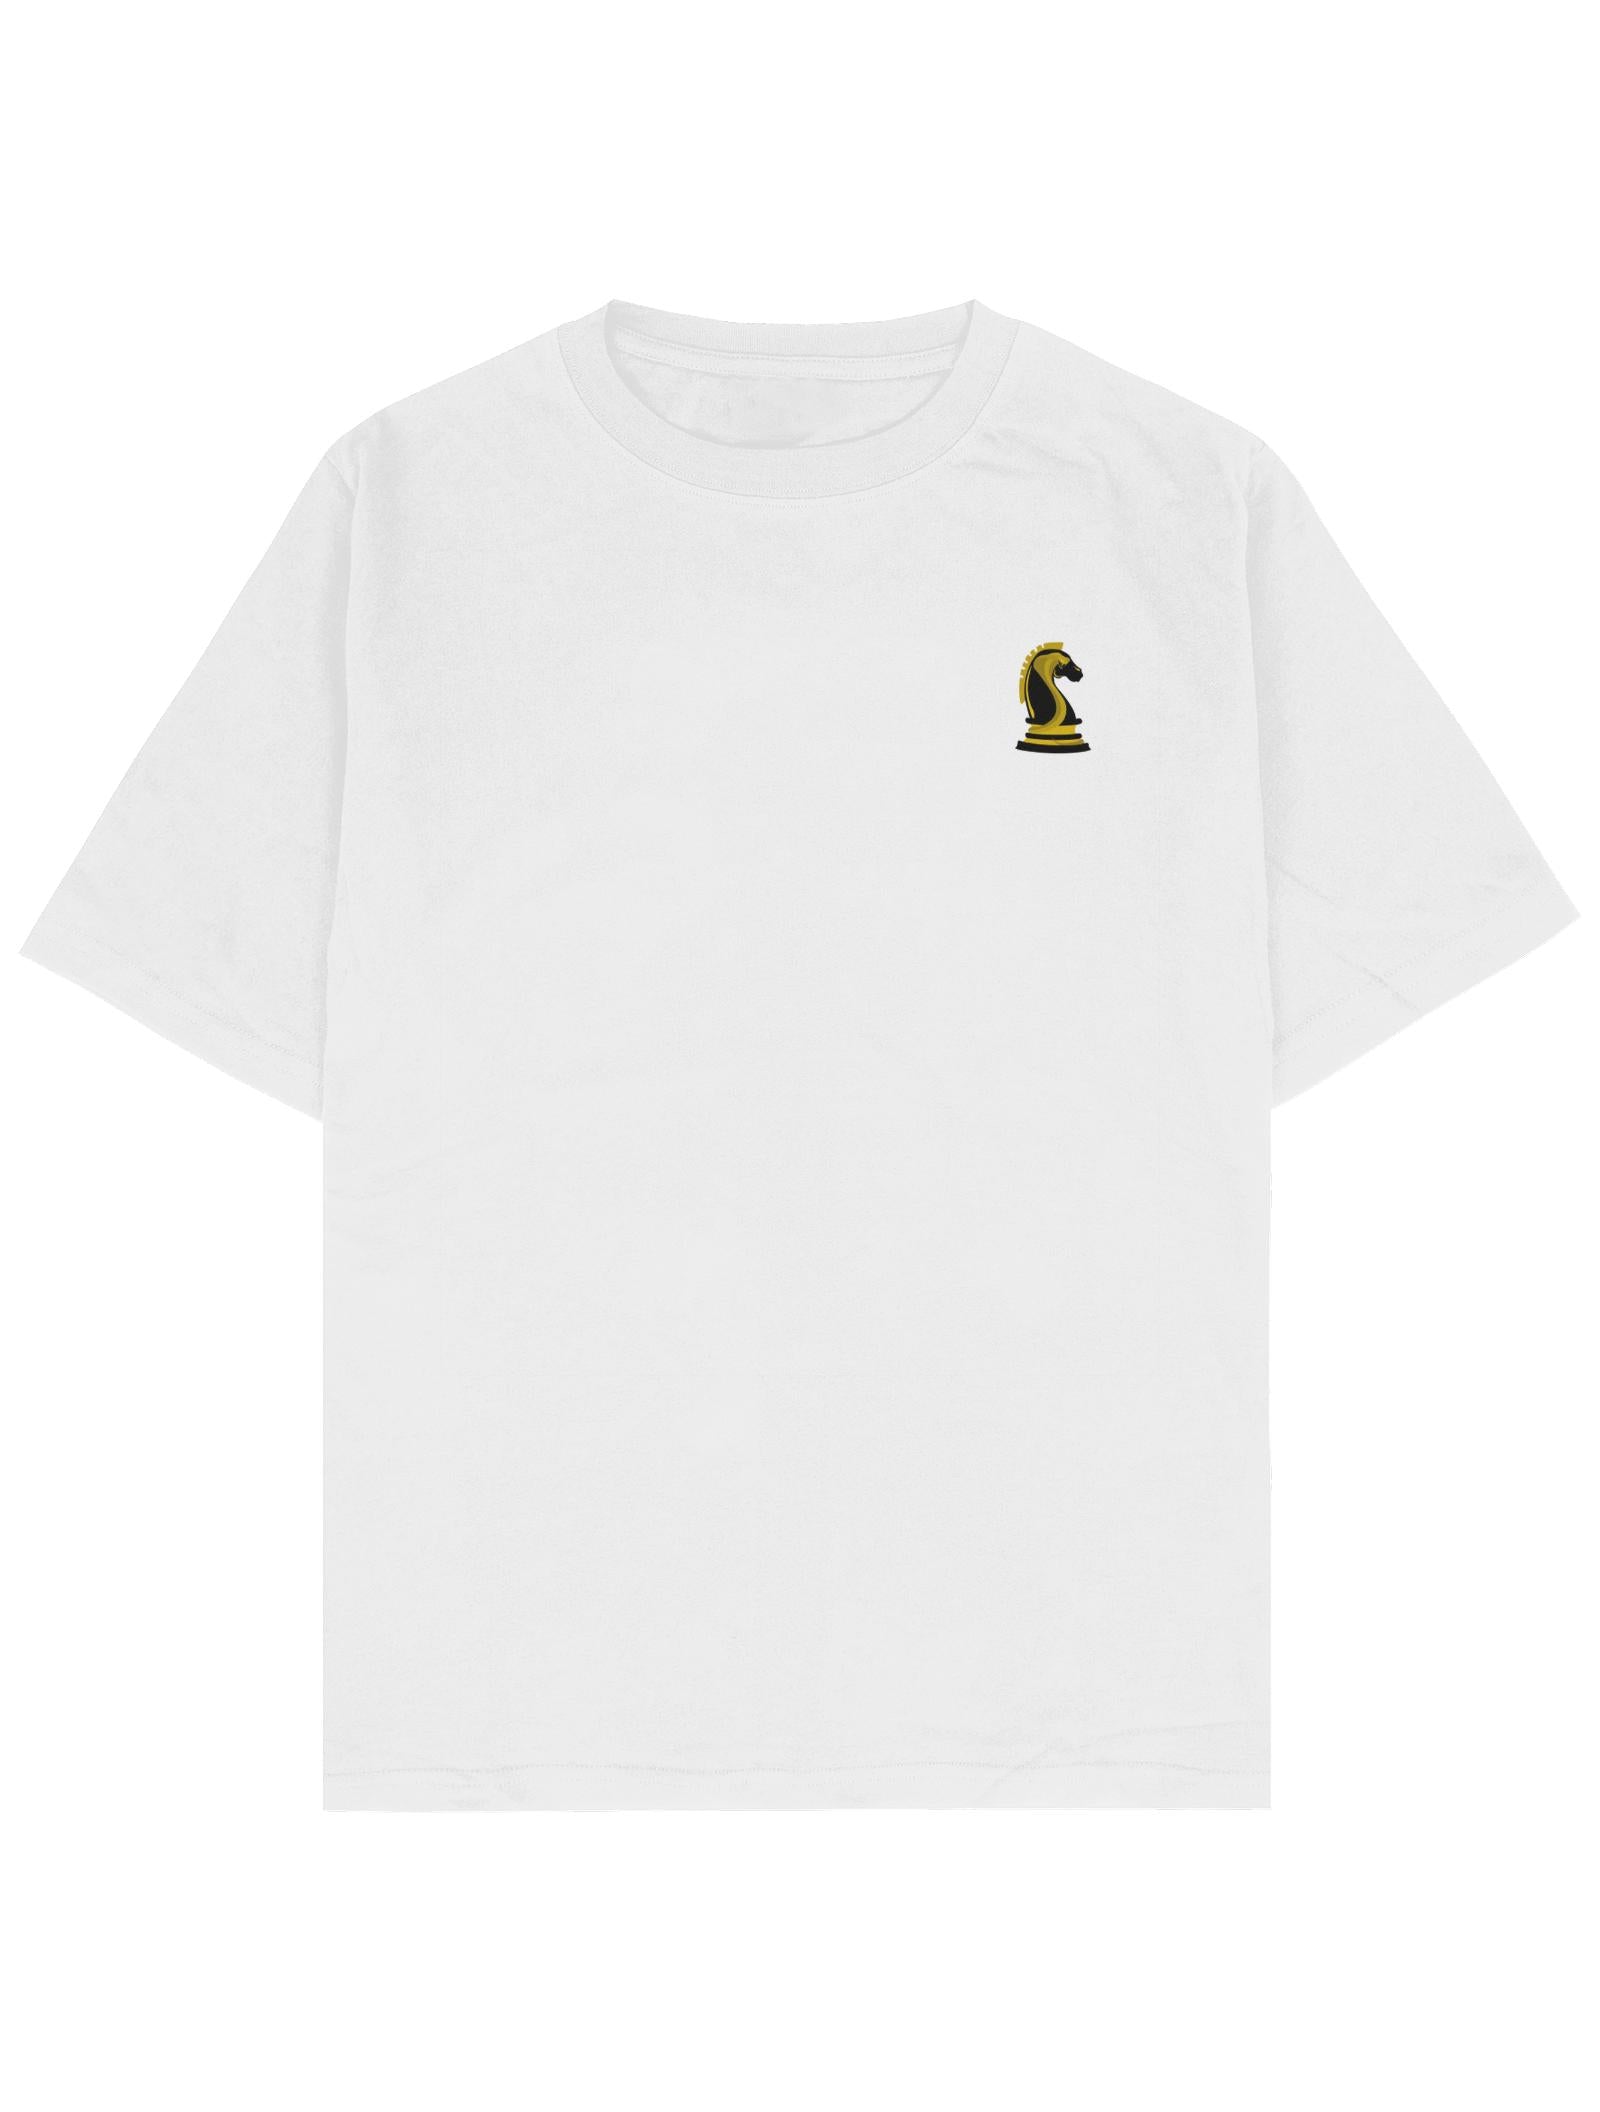 TopG Golden Horse Oversize T-Shirt